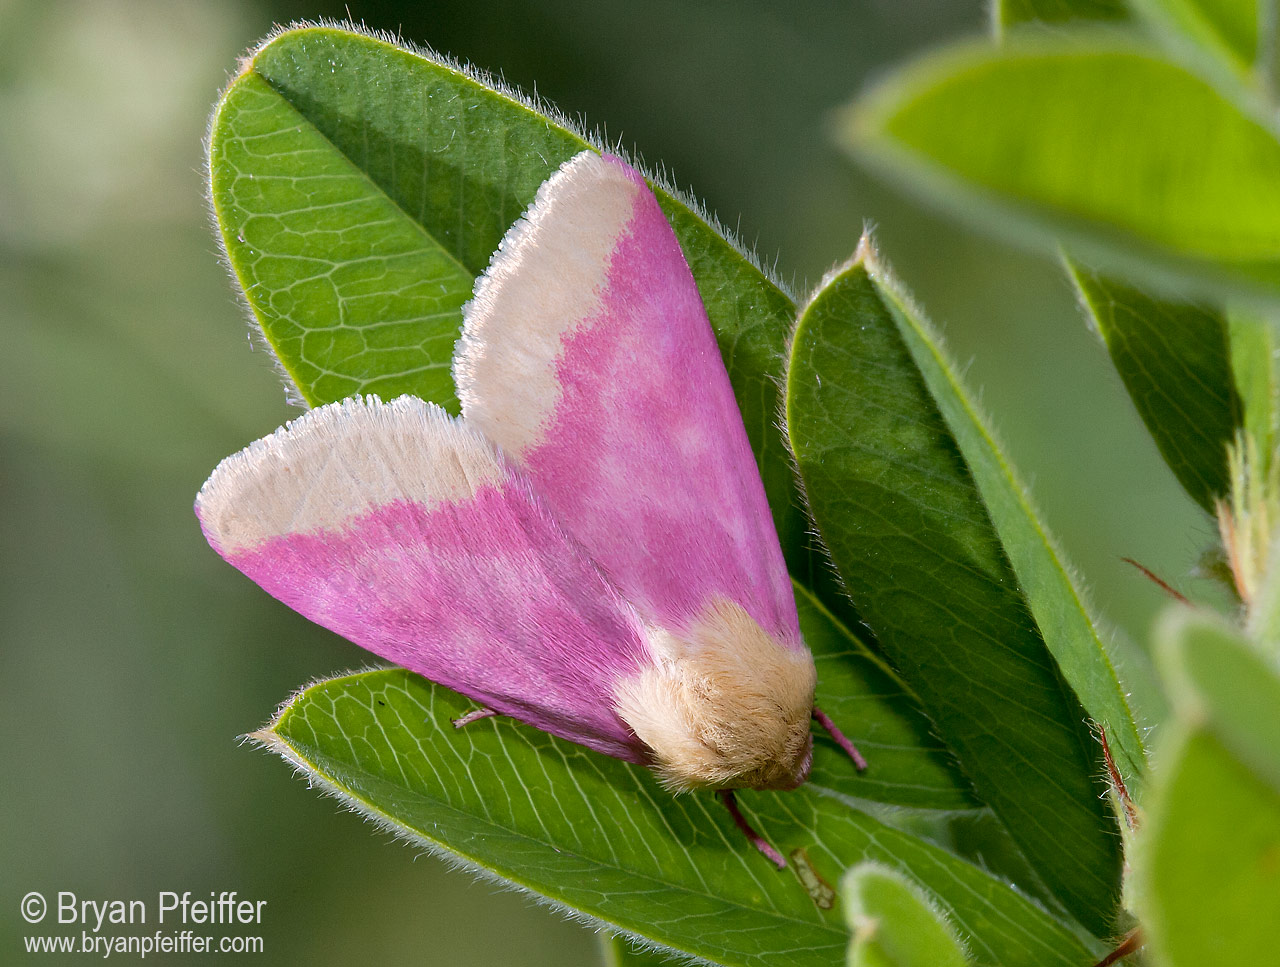 https://vtecostudies.org/wp-content/uploads/2015/06/primrose-moth-schinia-florida-1280x.jpg